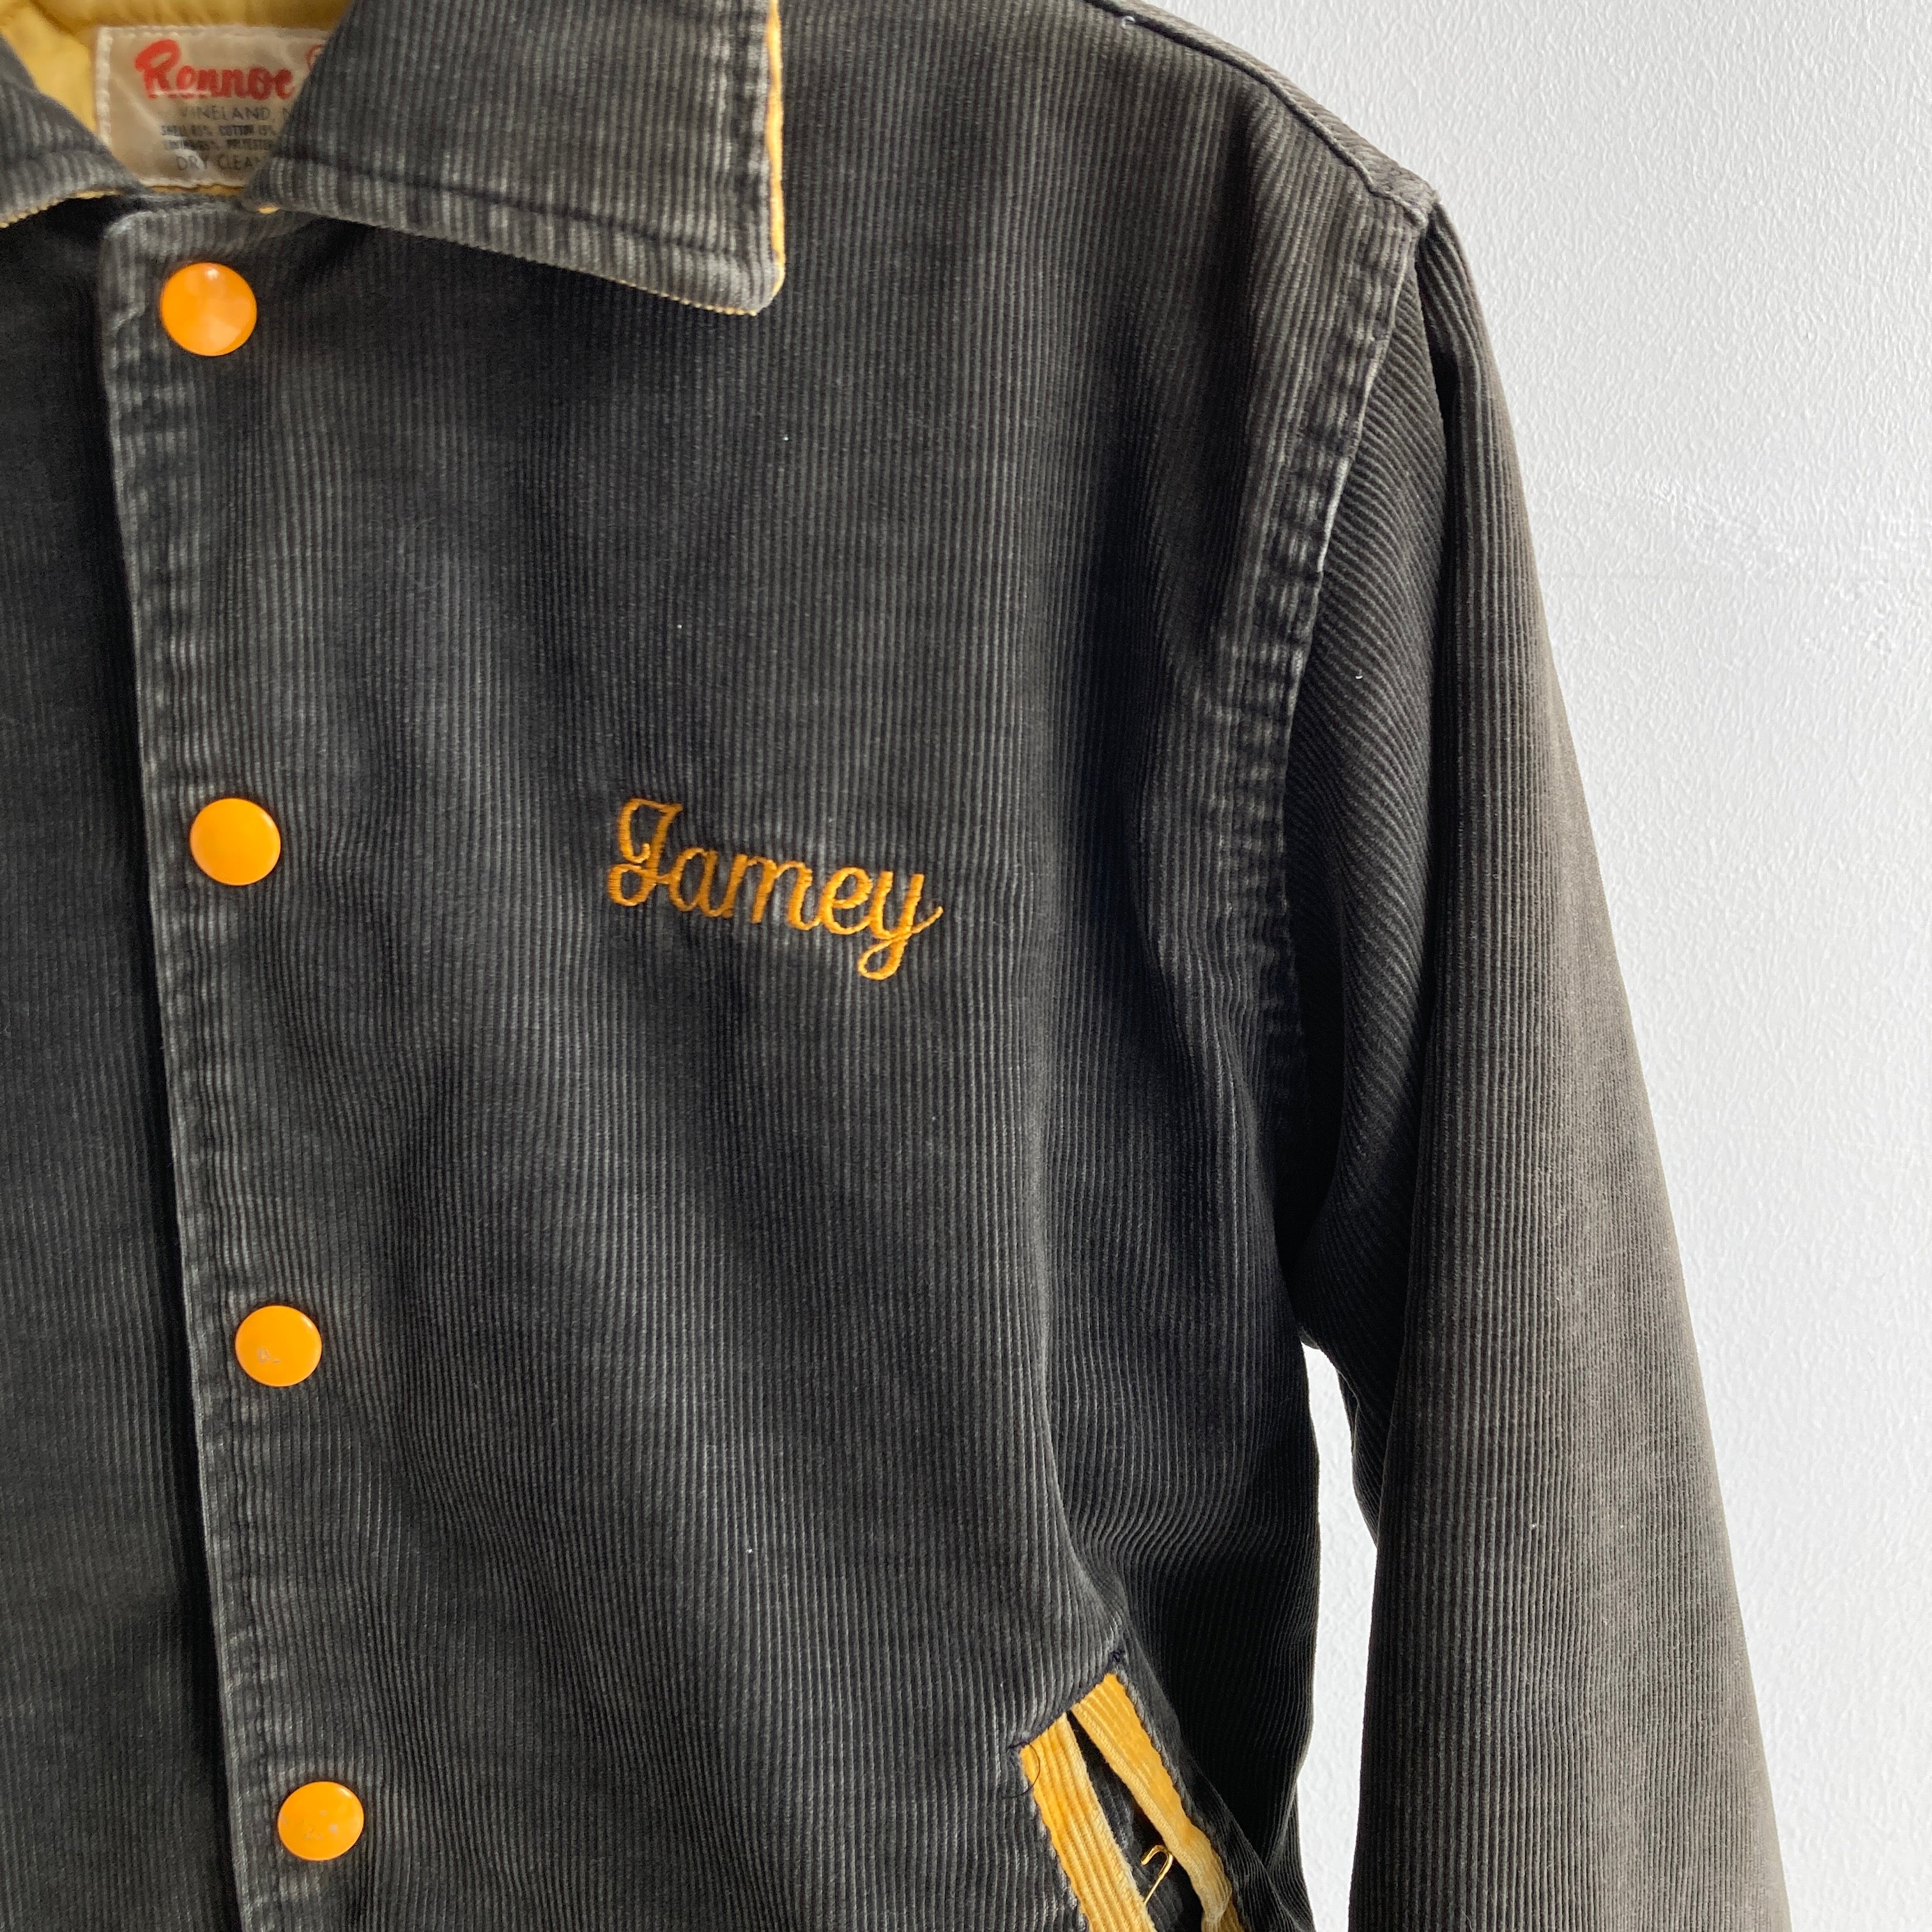 1970's Corduroy Letter Jacket That Belonged To Jamey - Windsor On Backside